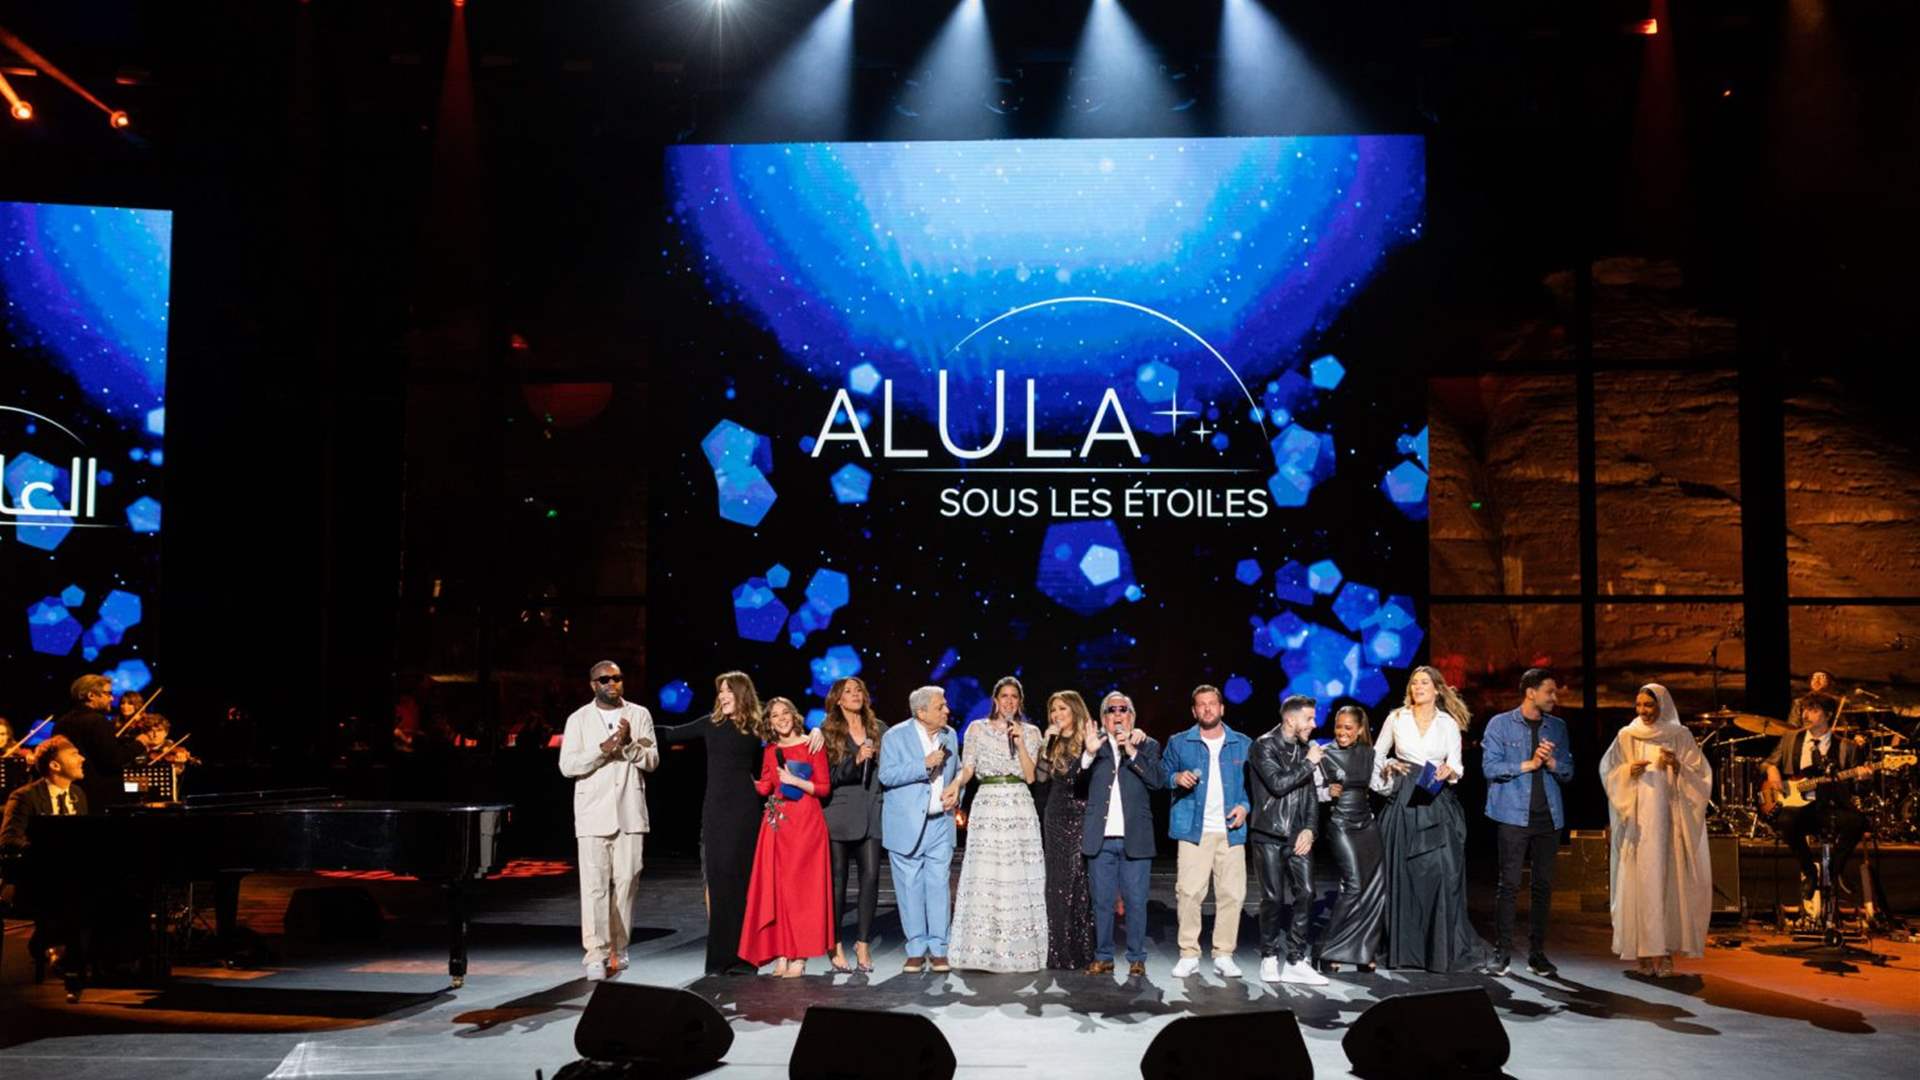 ALULA SOUS LES ETOILES: A Franco-Saudi Musical Fusion on LBCI